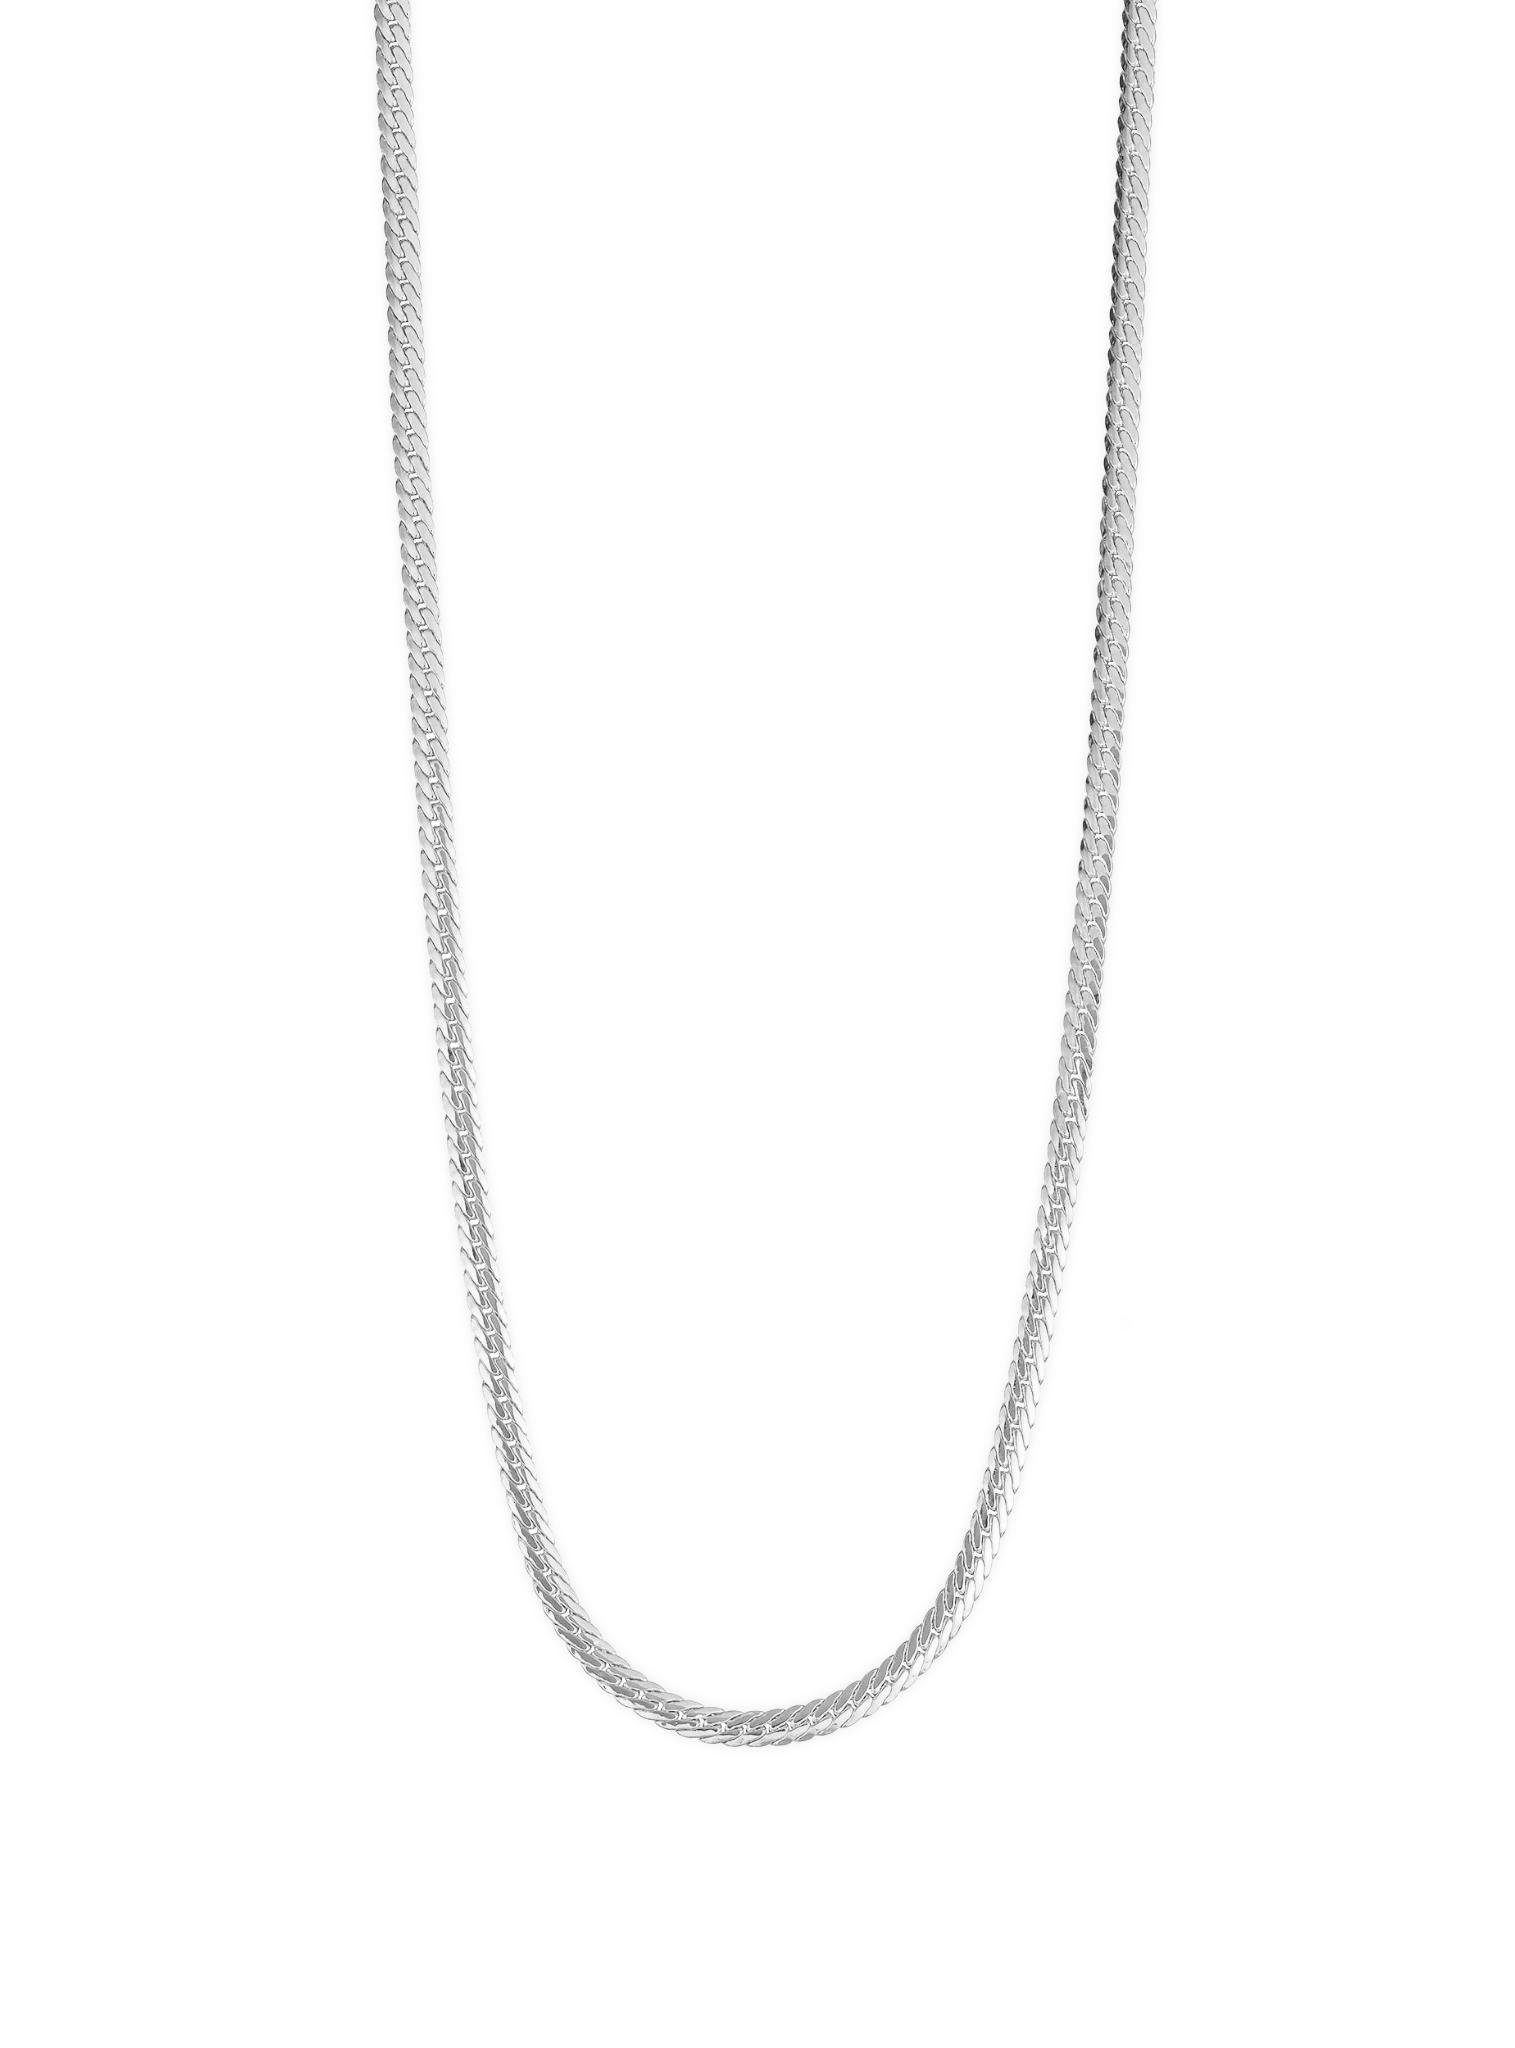 389546 9ct white gold herringbone necklace chain hbo60 full